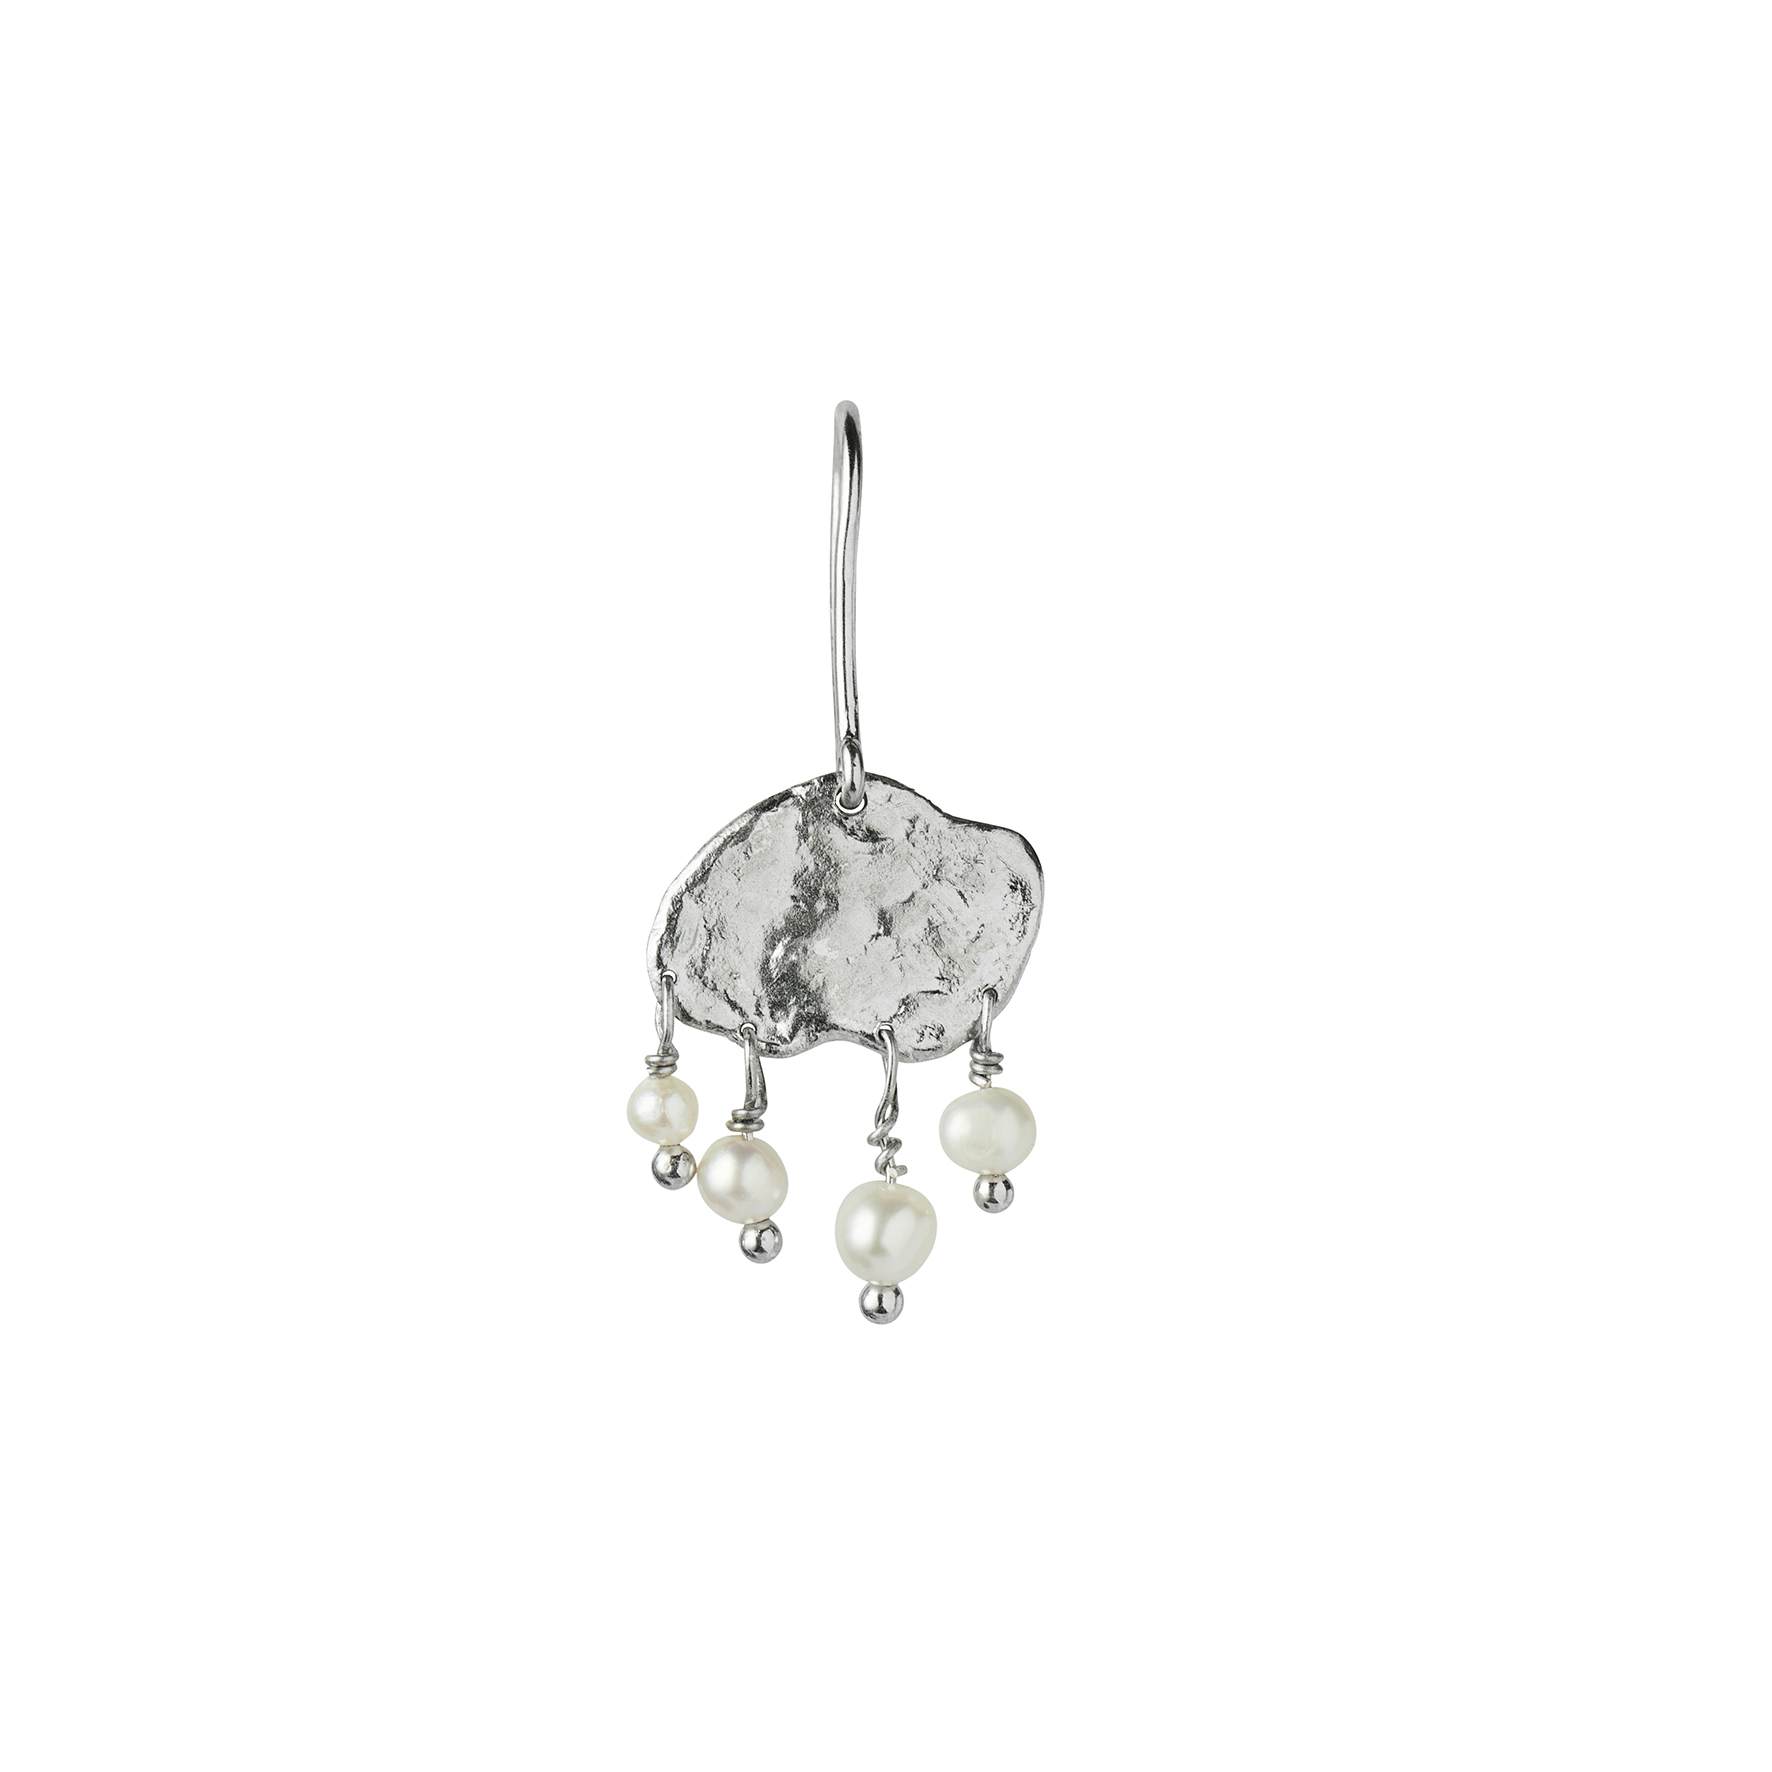 Big Gold Splash Earring – Elegant Pearls fra STINE A Jewelry i Sølv Sterling 925